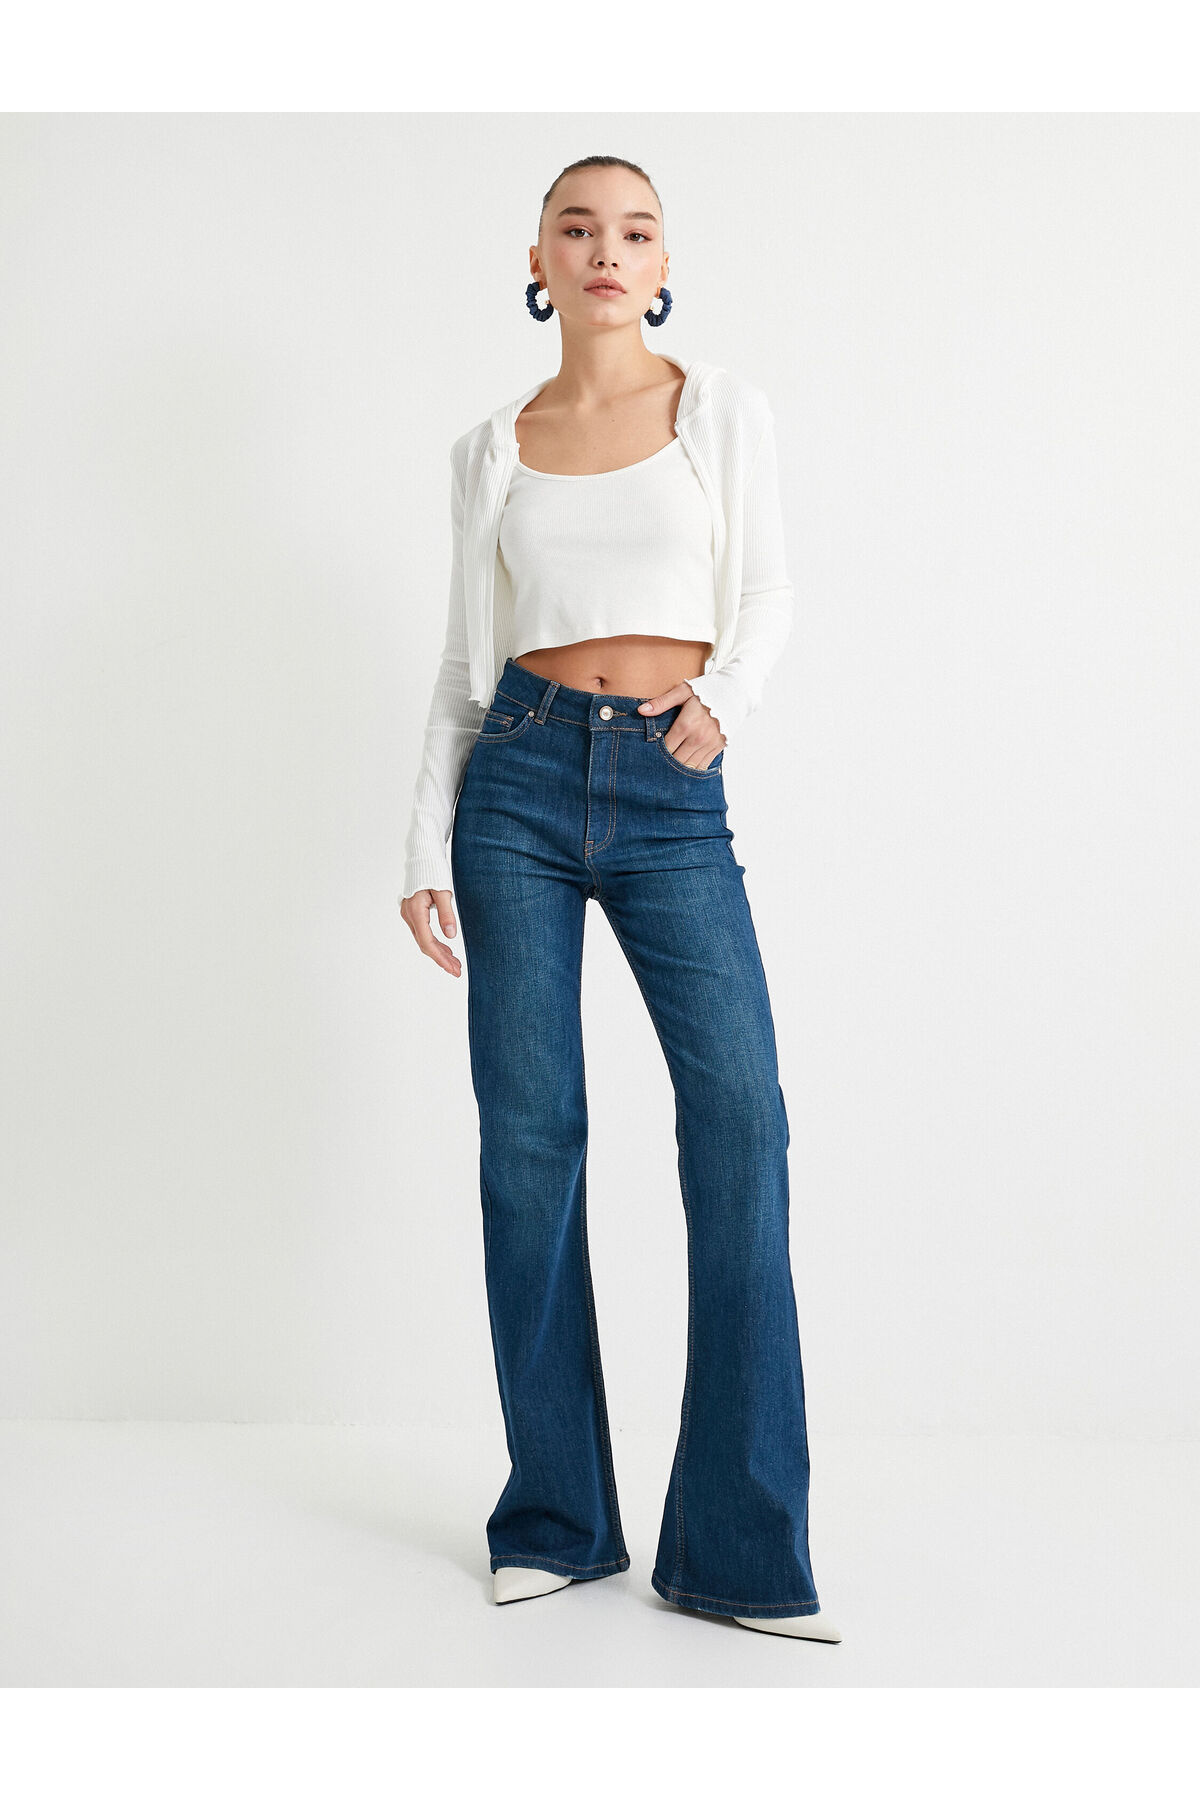 Koton Flare Jeans Slim Fit Standard Waist Elastic Cotton Pocket - Victoria Jeans